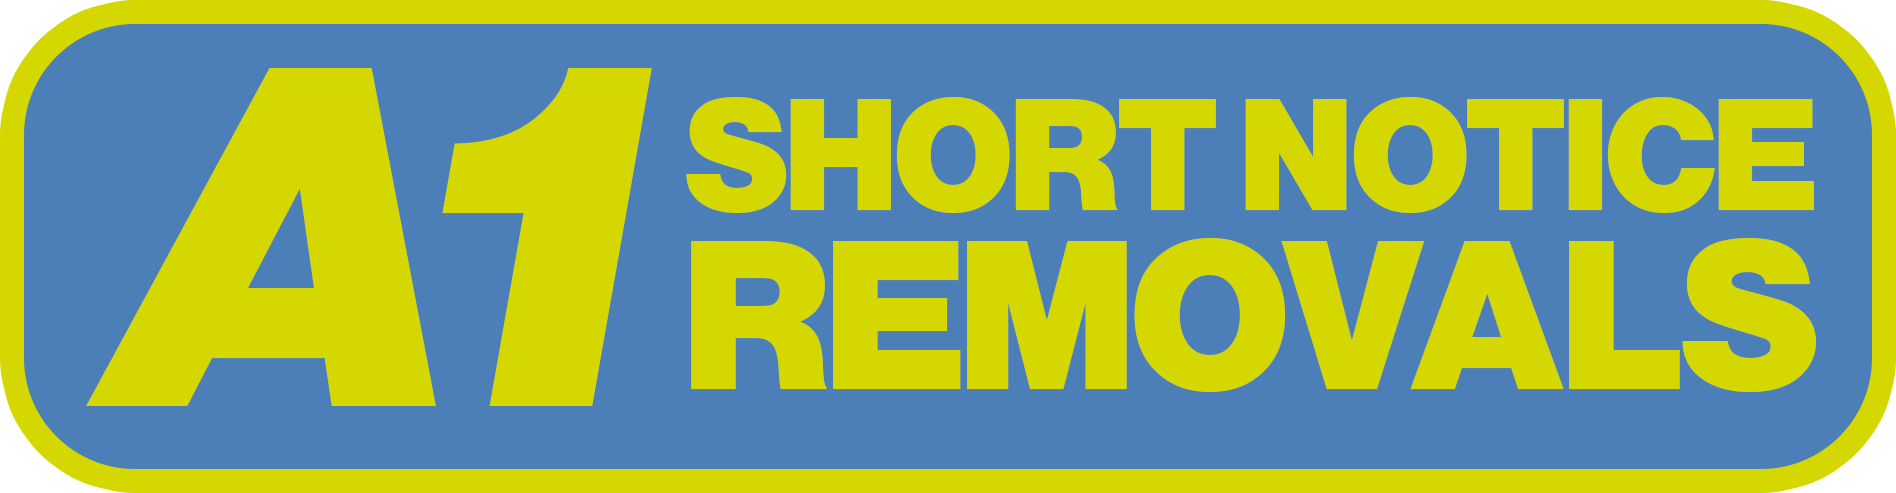 A1 Short Notice Removals NI logo